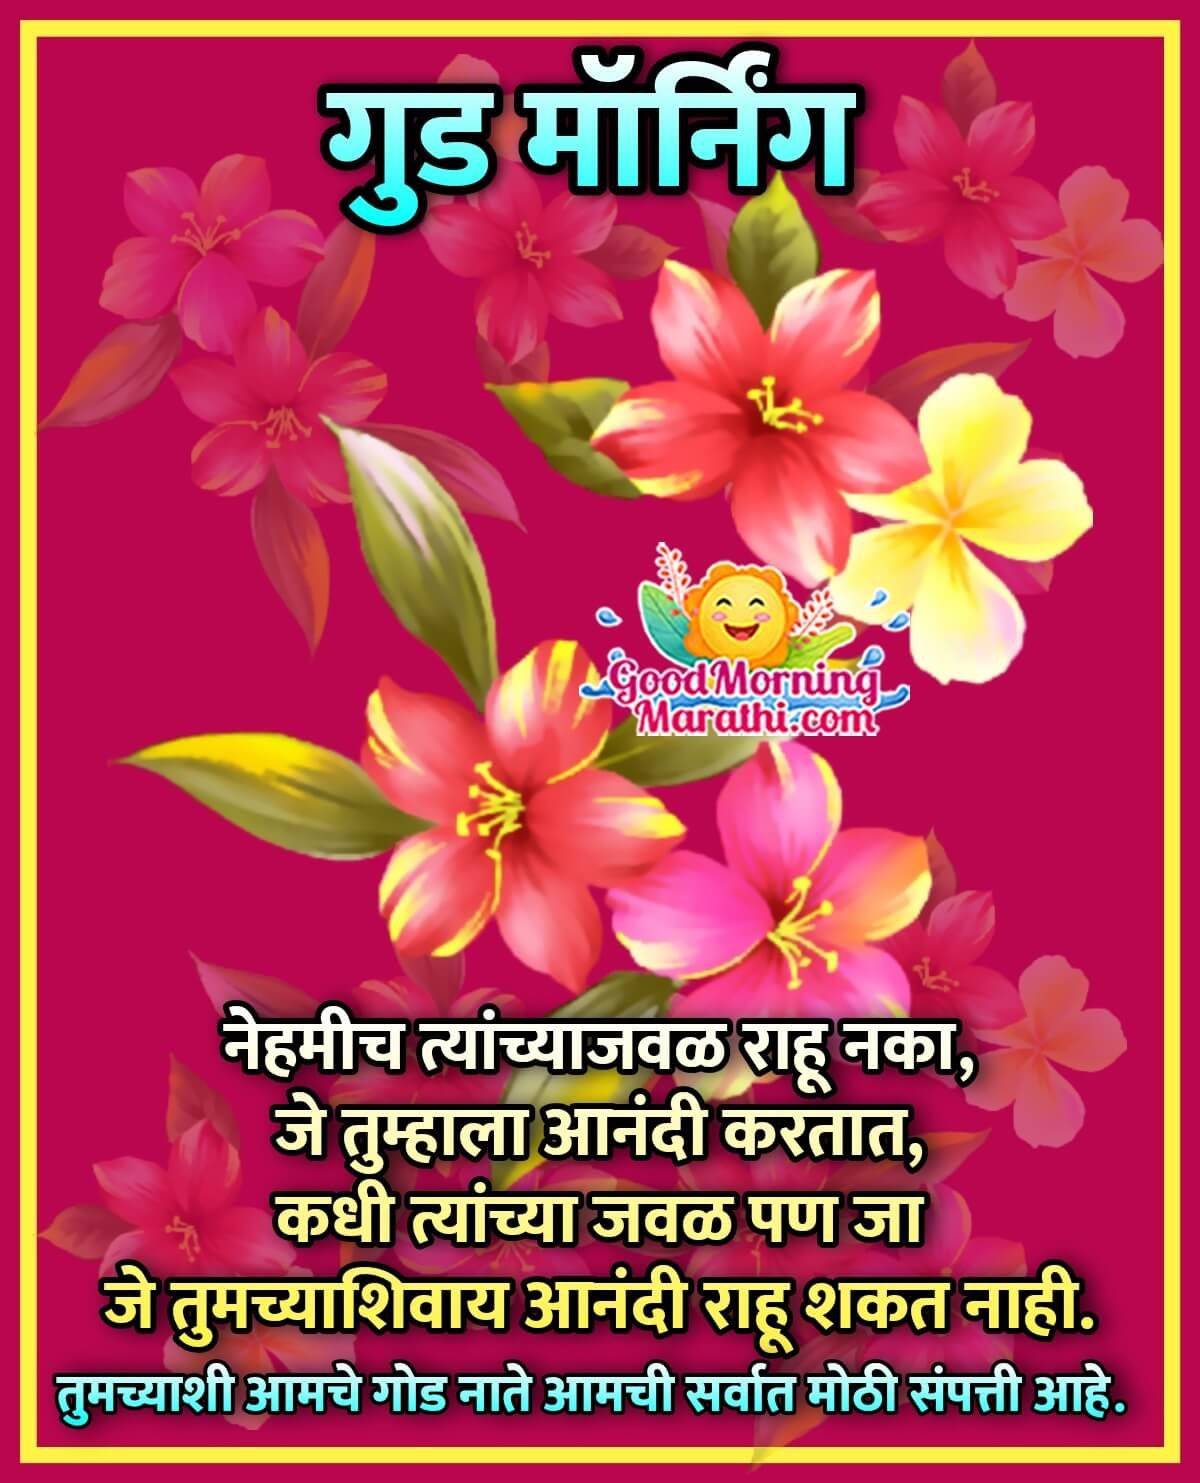 Good Morning Sweet Message In Marathi